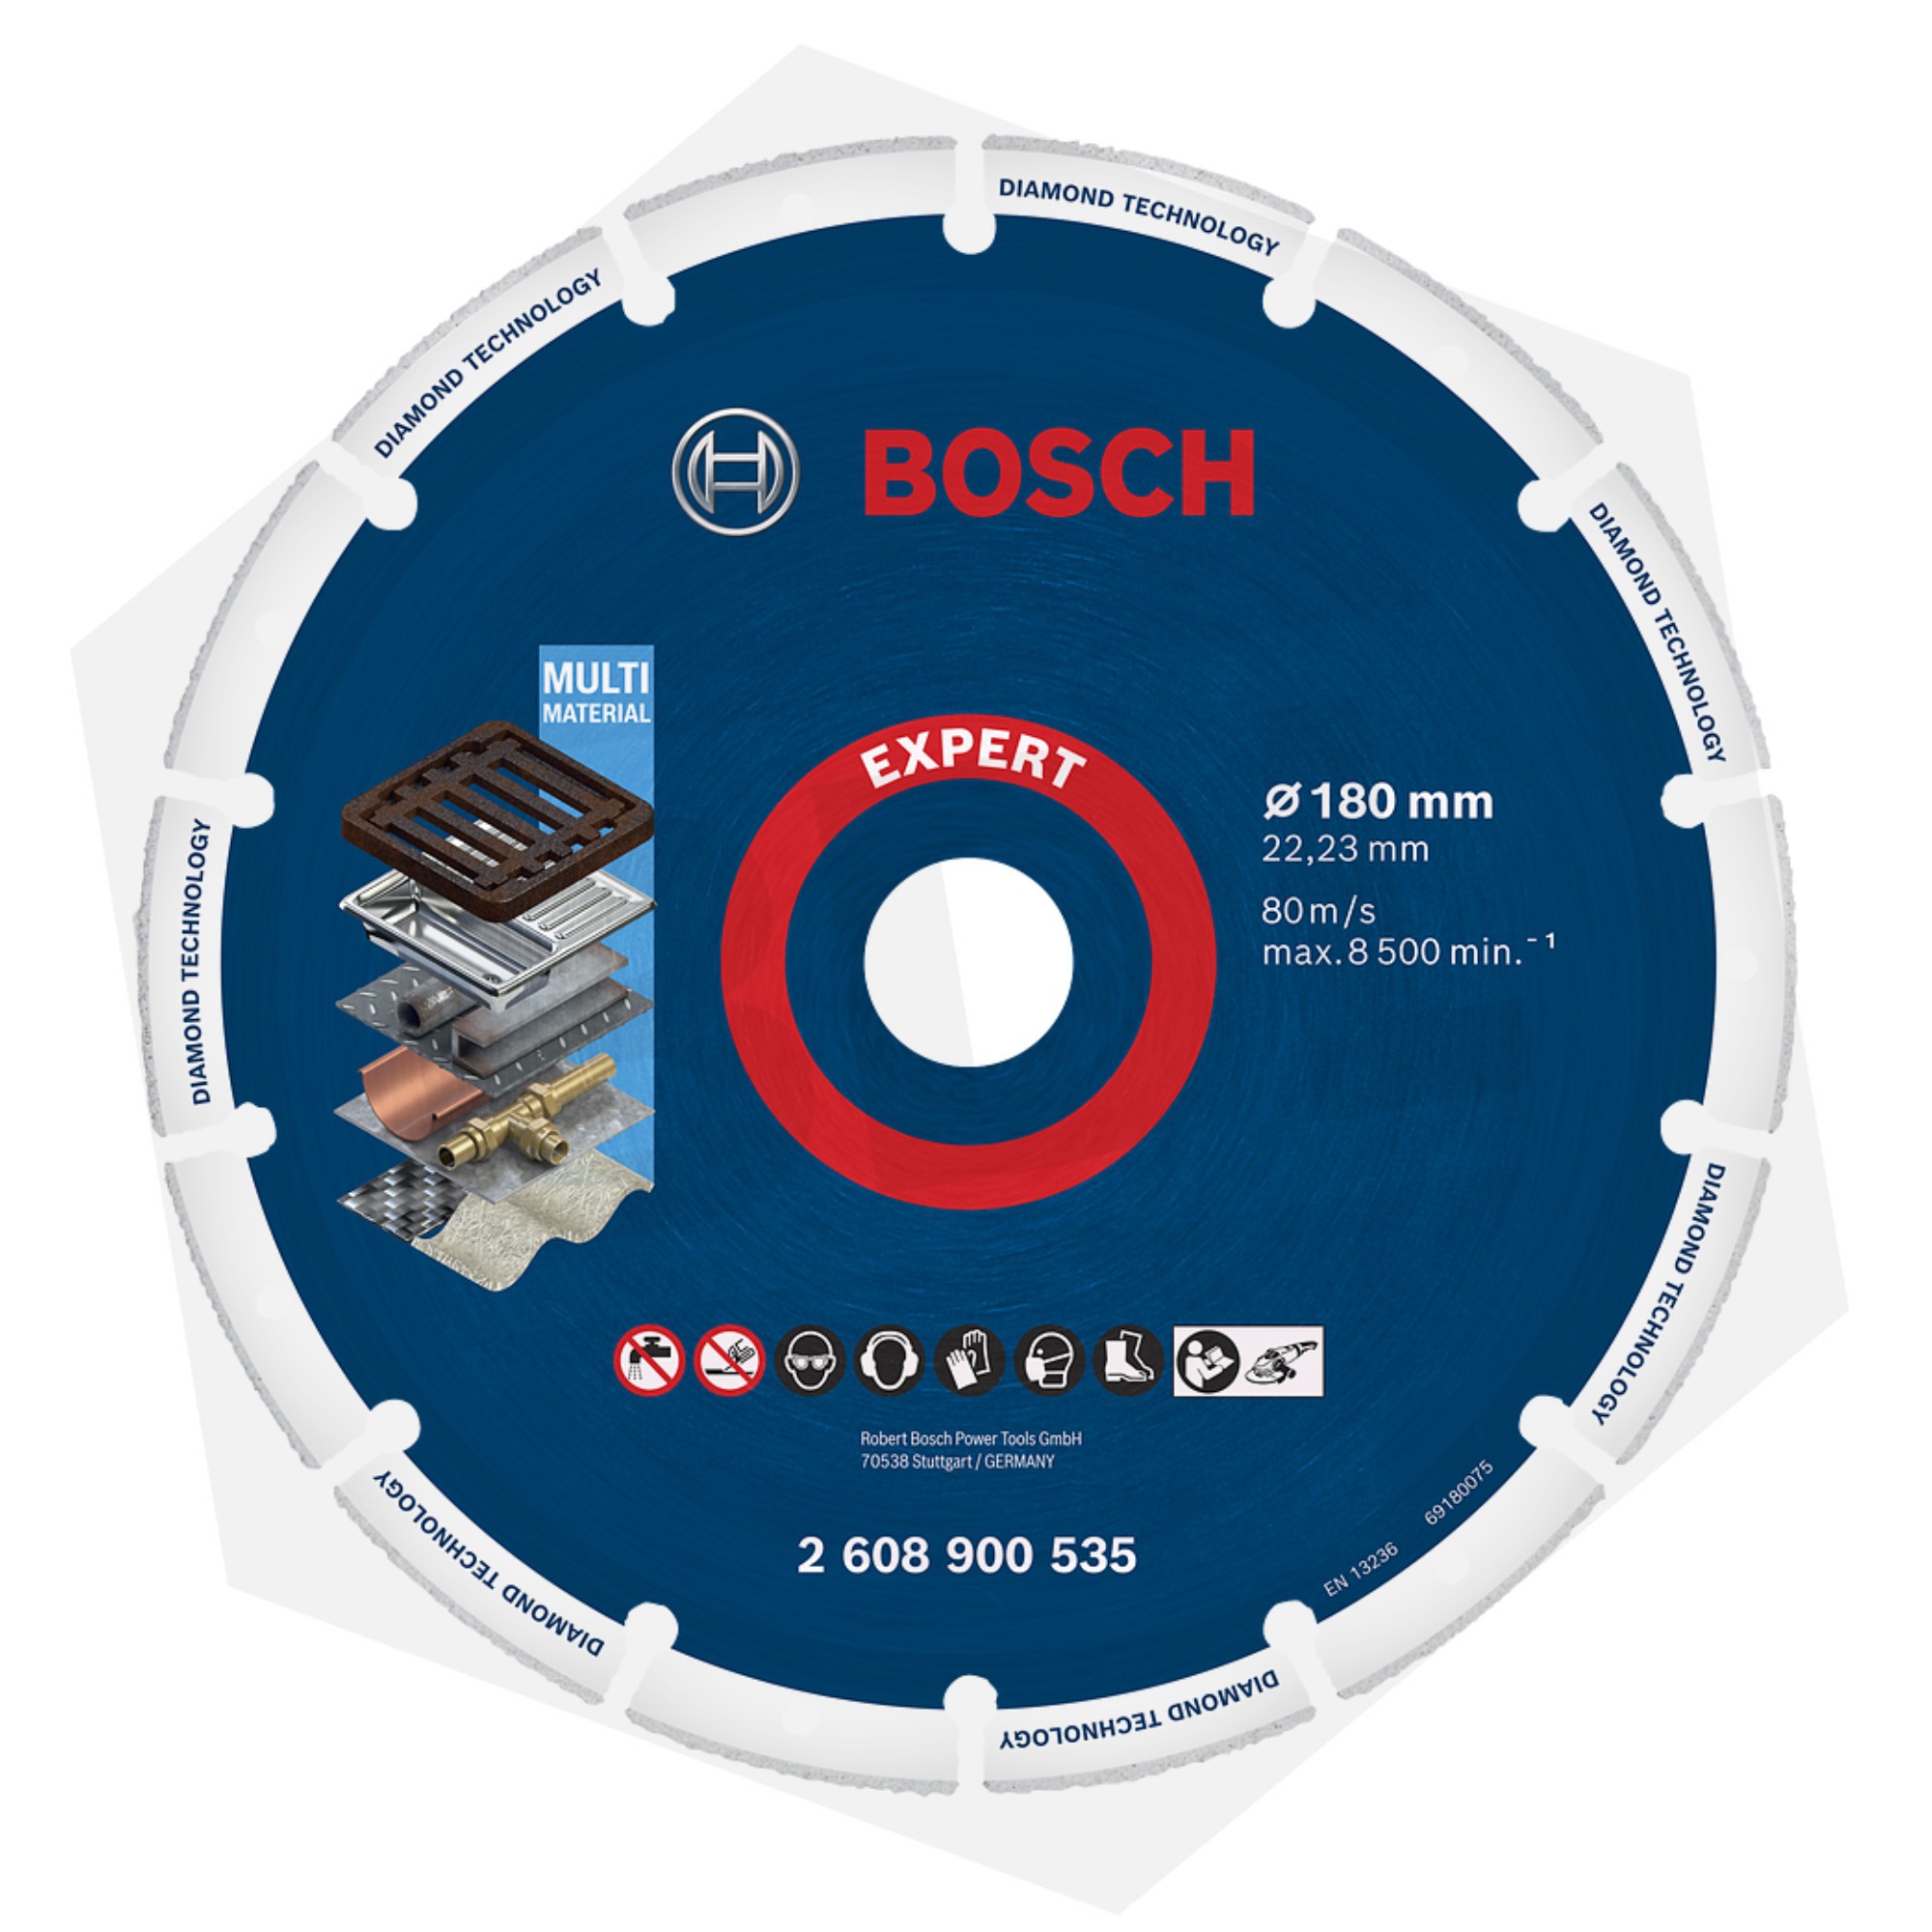 Disco de corte EXPERT Diamond Metal Wheel X-LOCK de 125 mm - Bosch  Professional